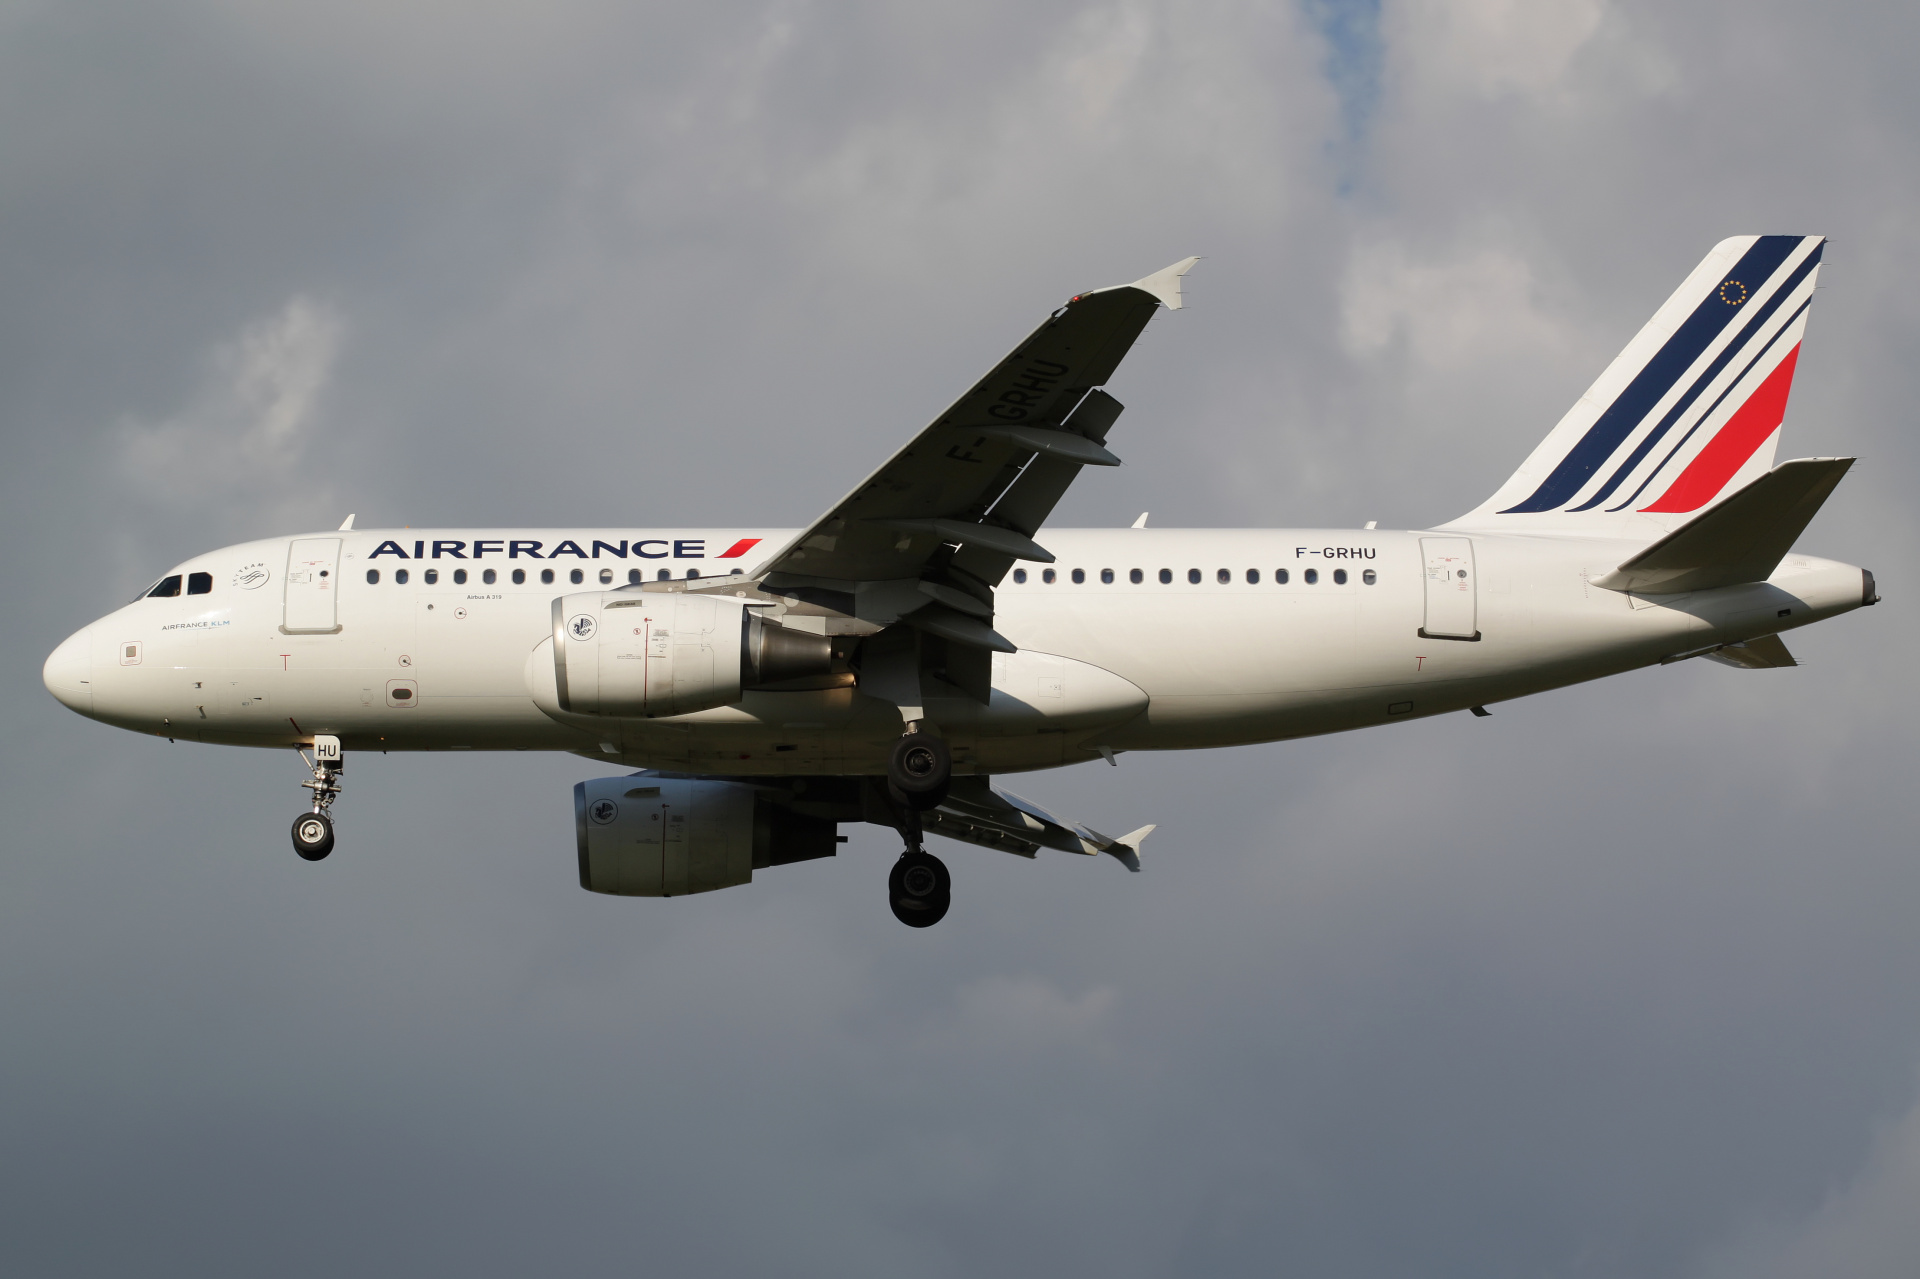 F-GRHU (new livery) (Aircraft » EPWA Spotting » Airbus A319-100 » Air France)